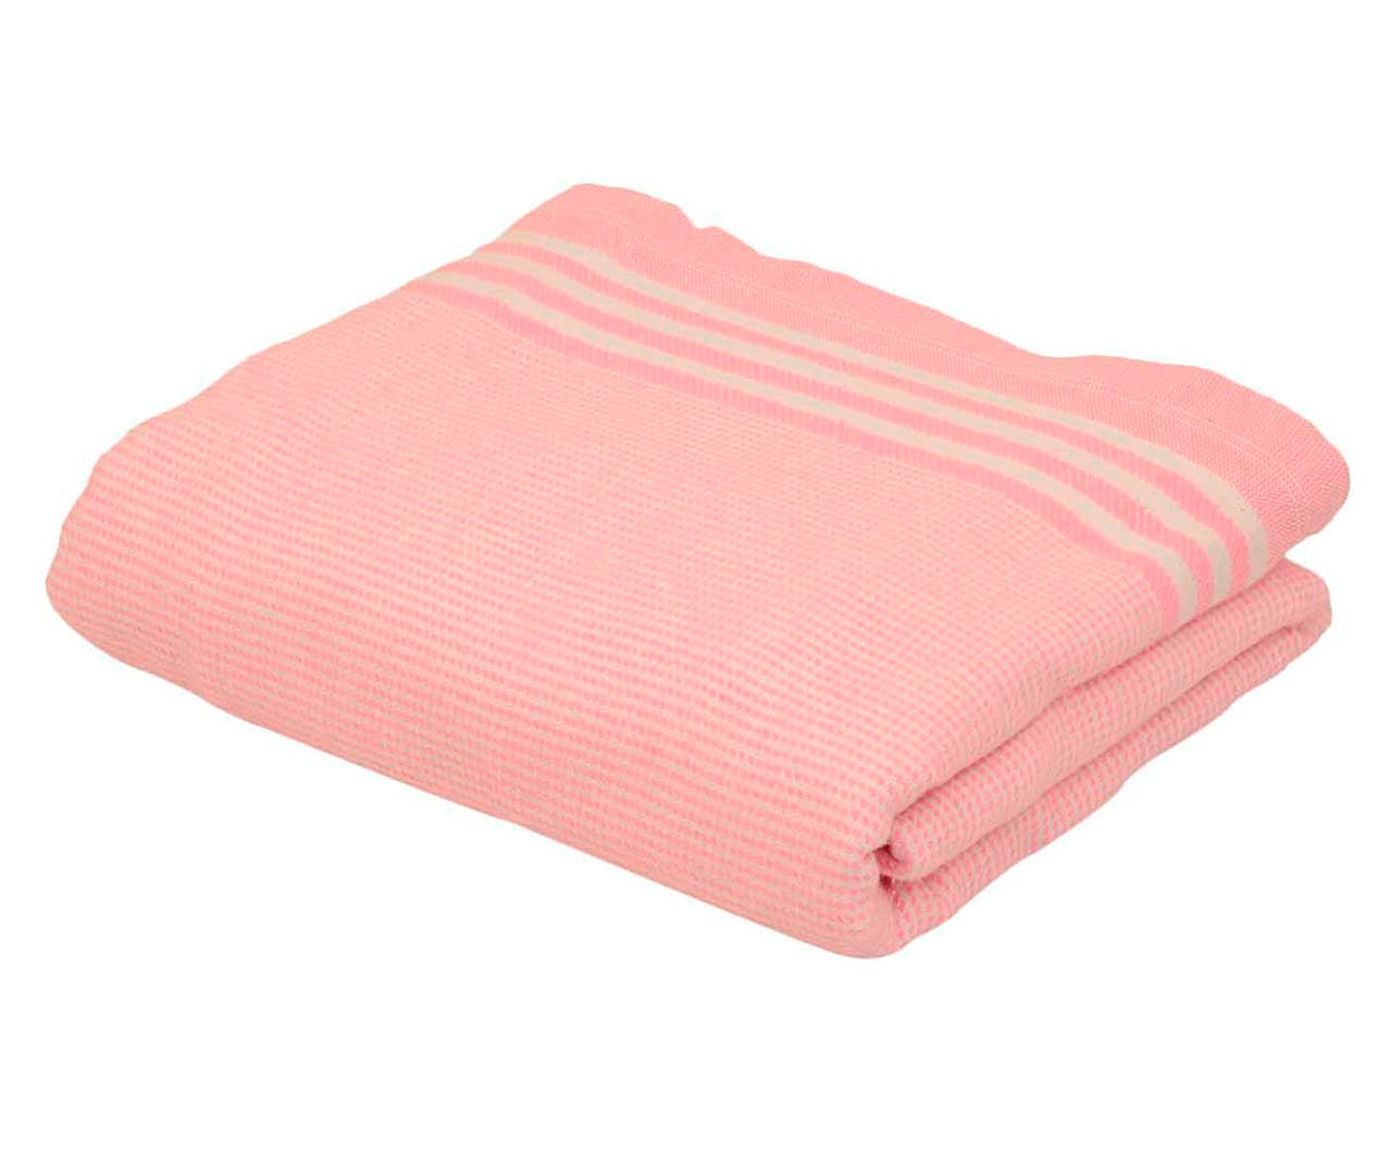 Cobertor talisman belle - para cama queen size | Westwing.com.br